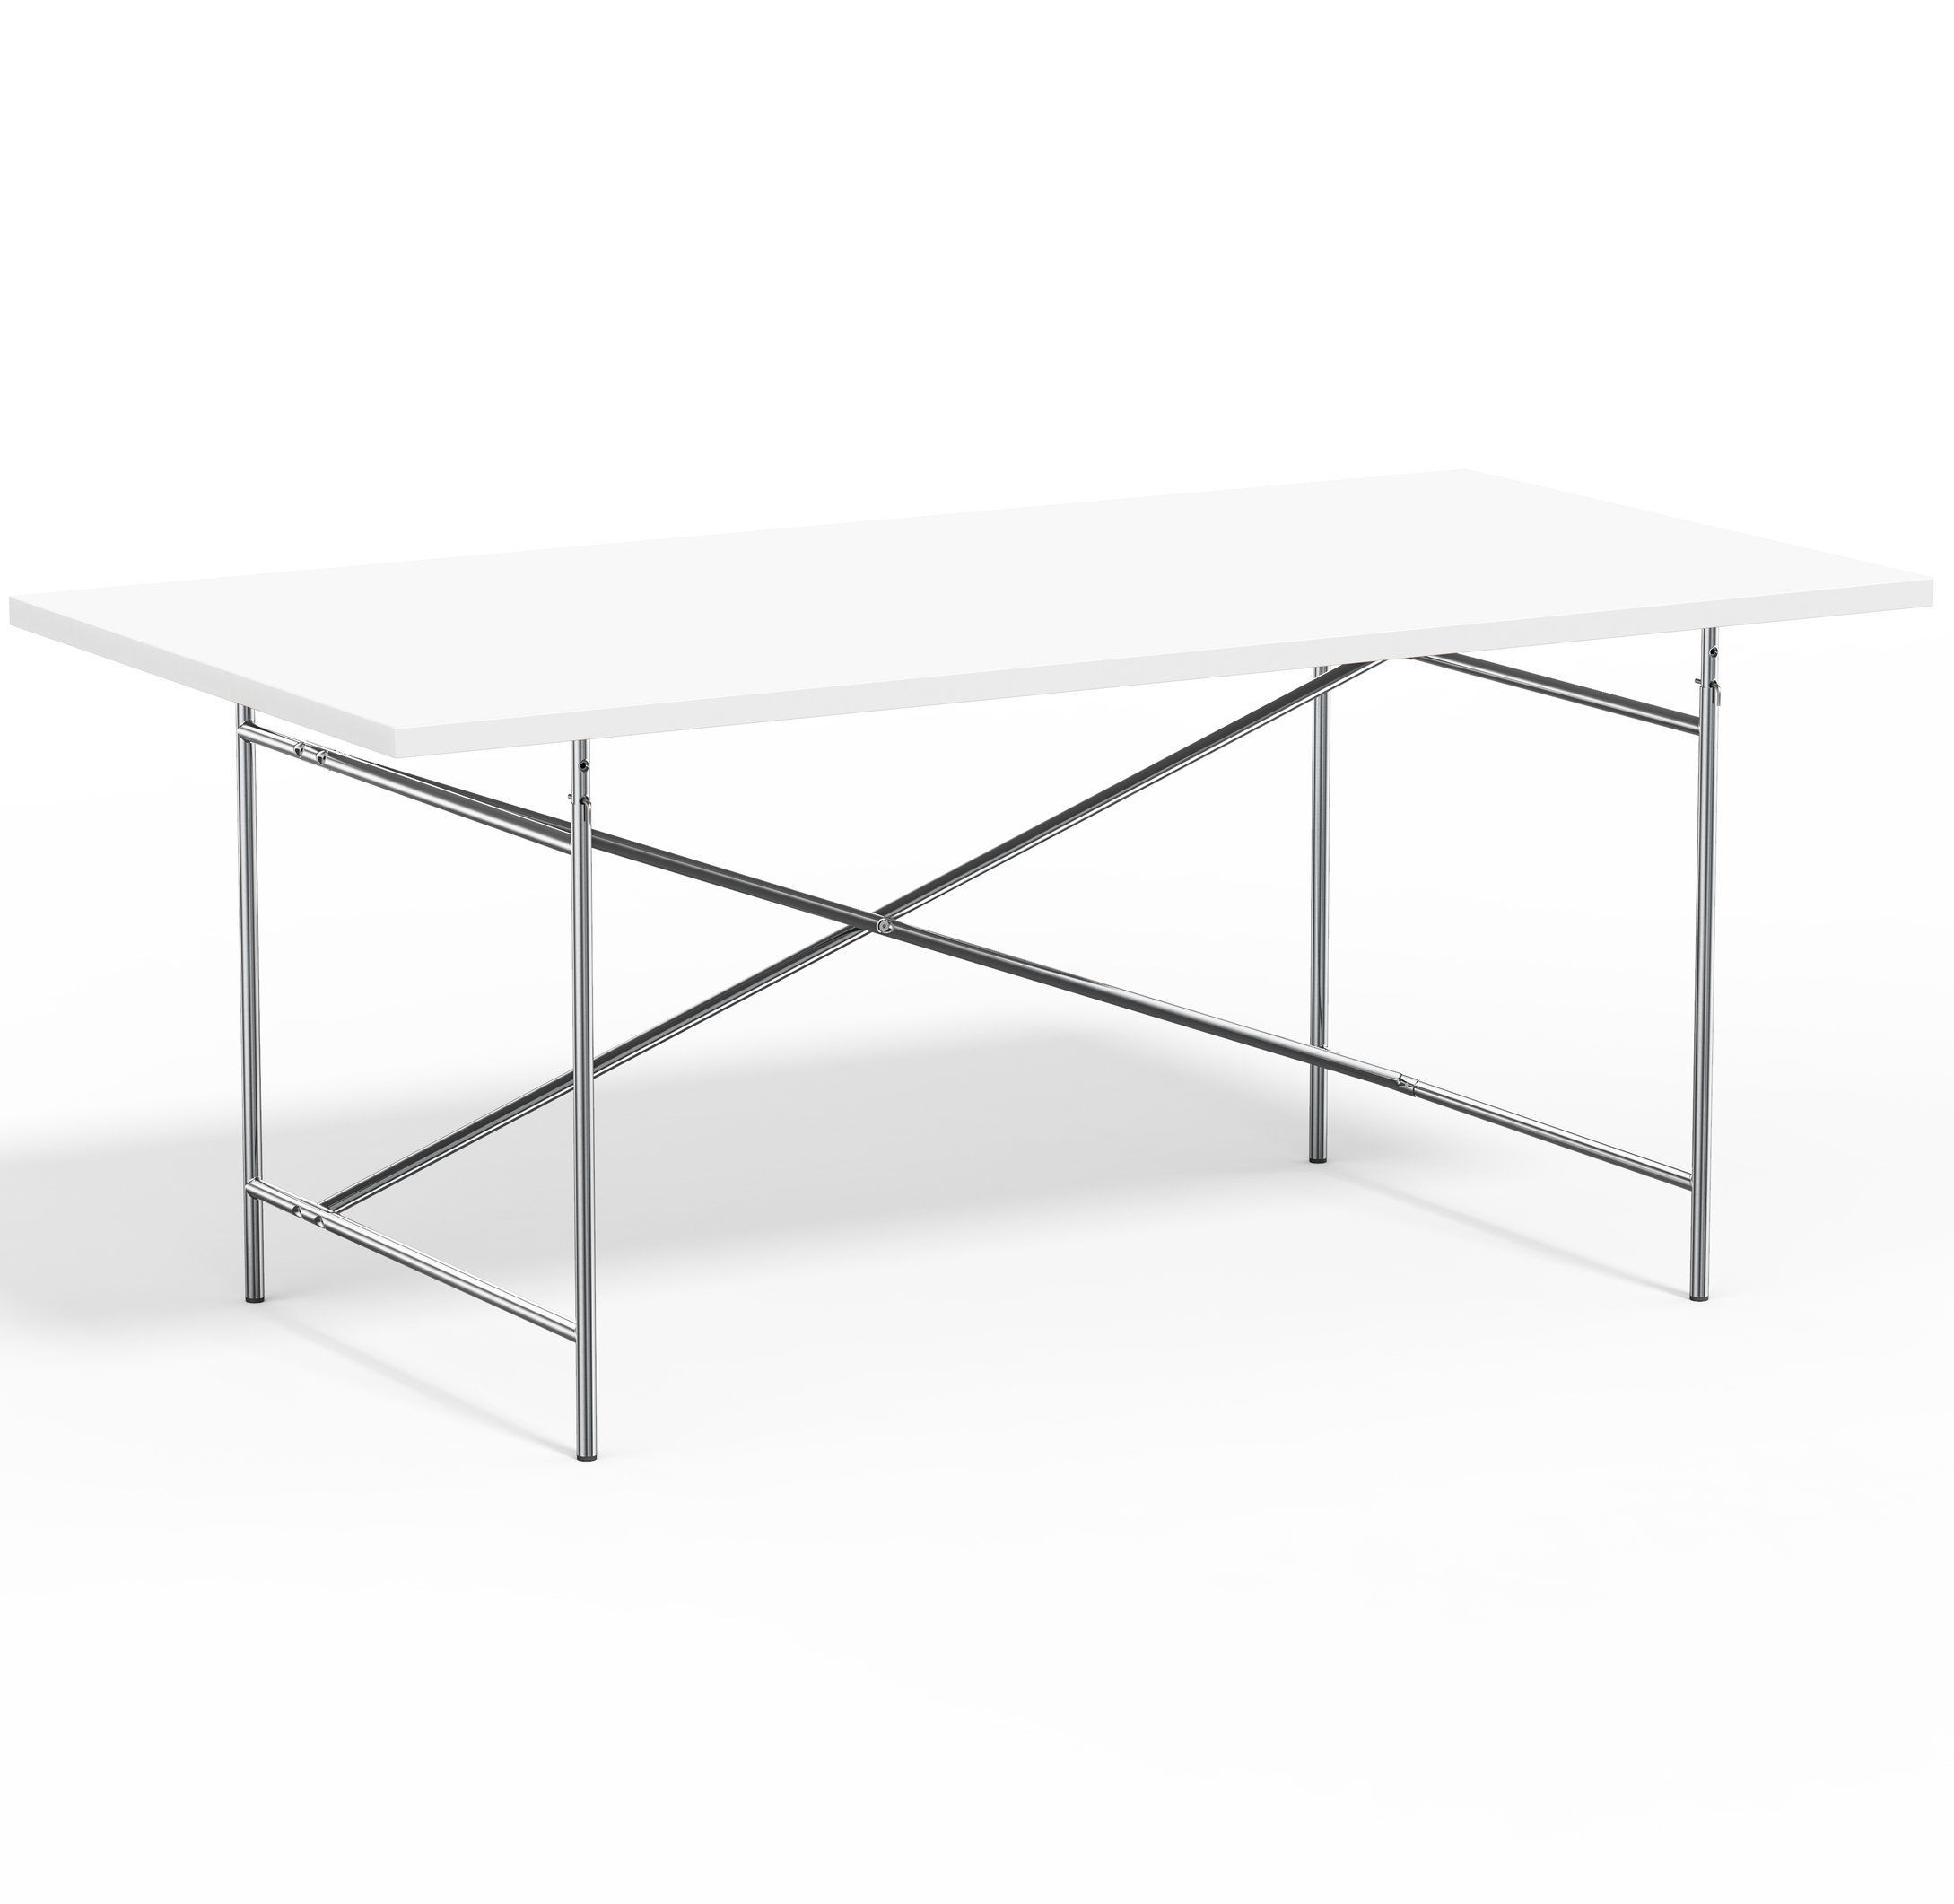 Lampert Eiermann Tischgestell 2 - 135 x 78 cm - Chrom - Melmain weiß full--9